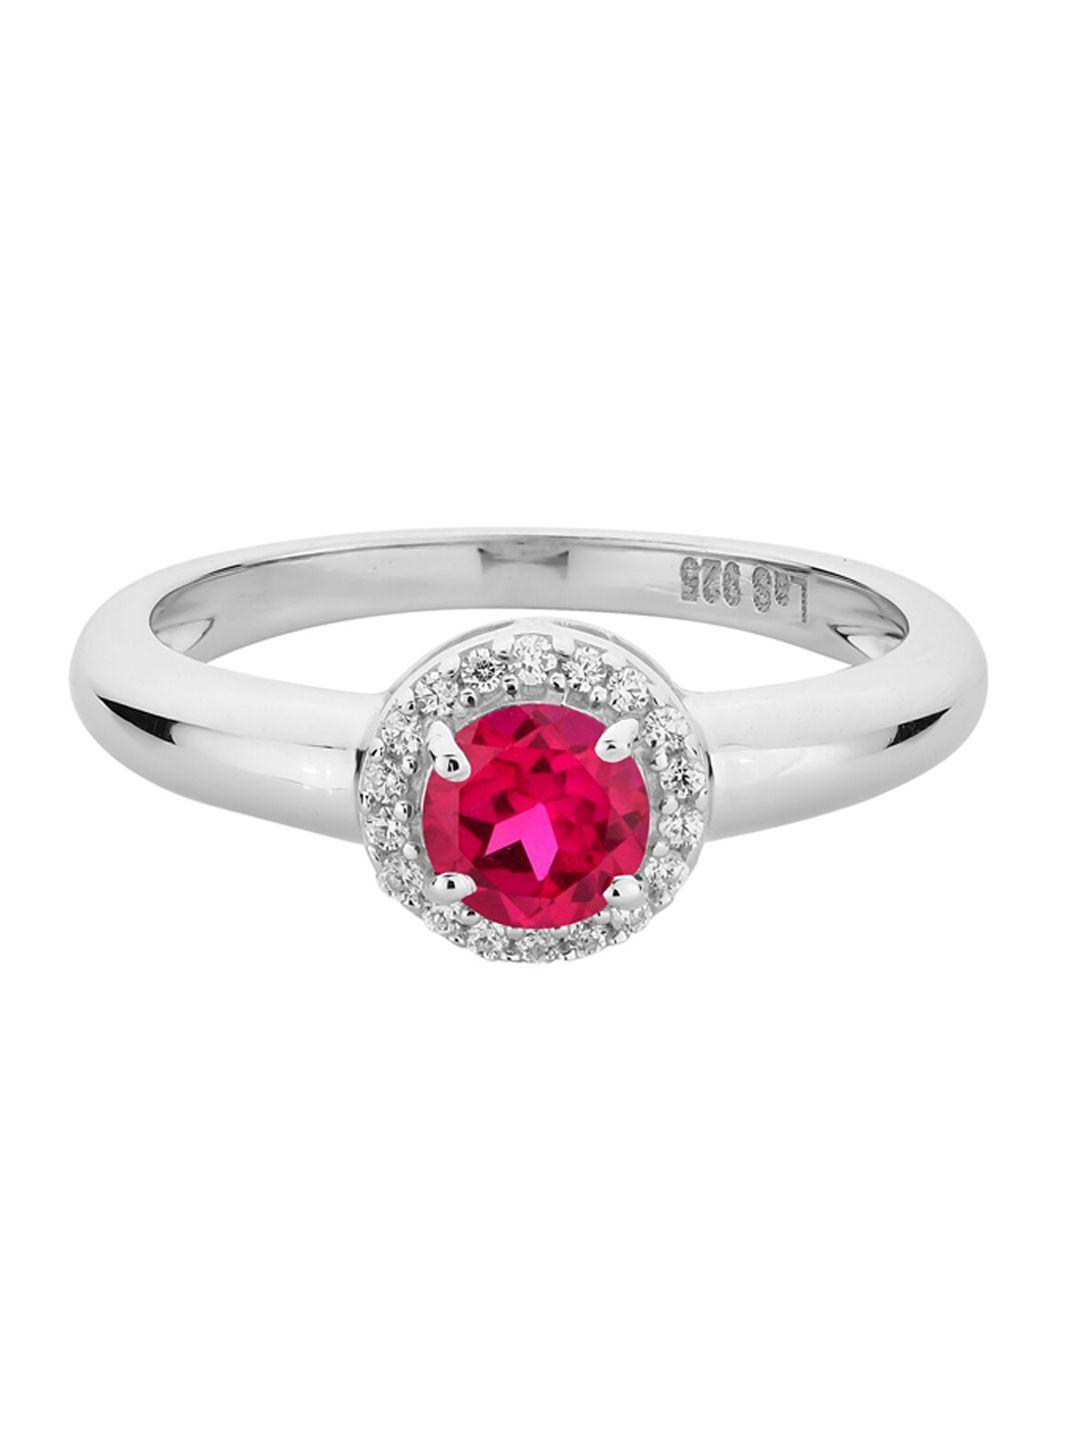 la soula 925 sterling silver ruby stone-studded finger ring